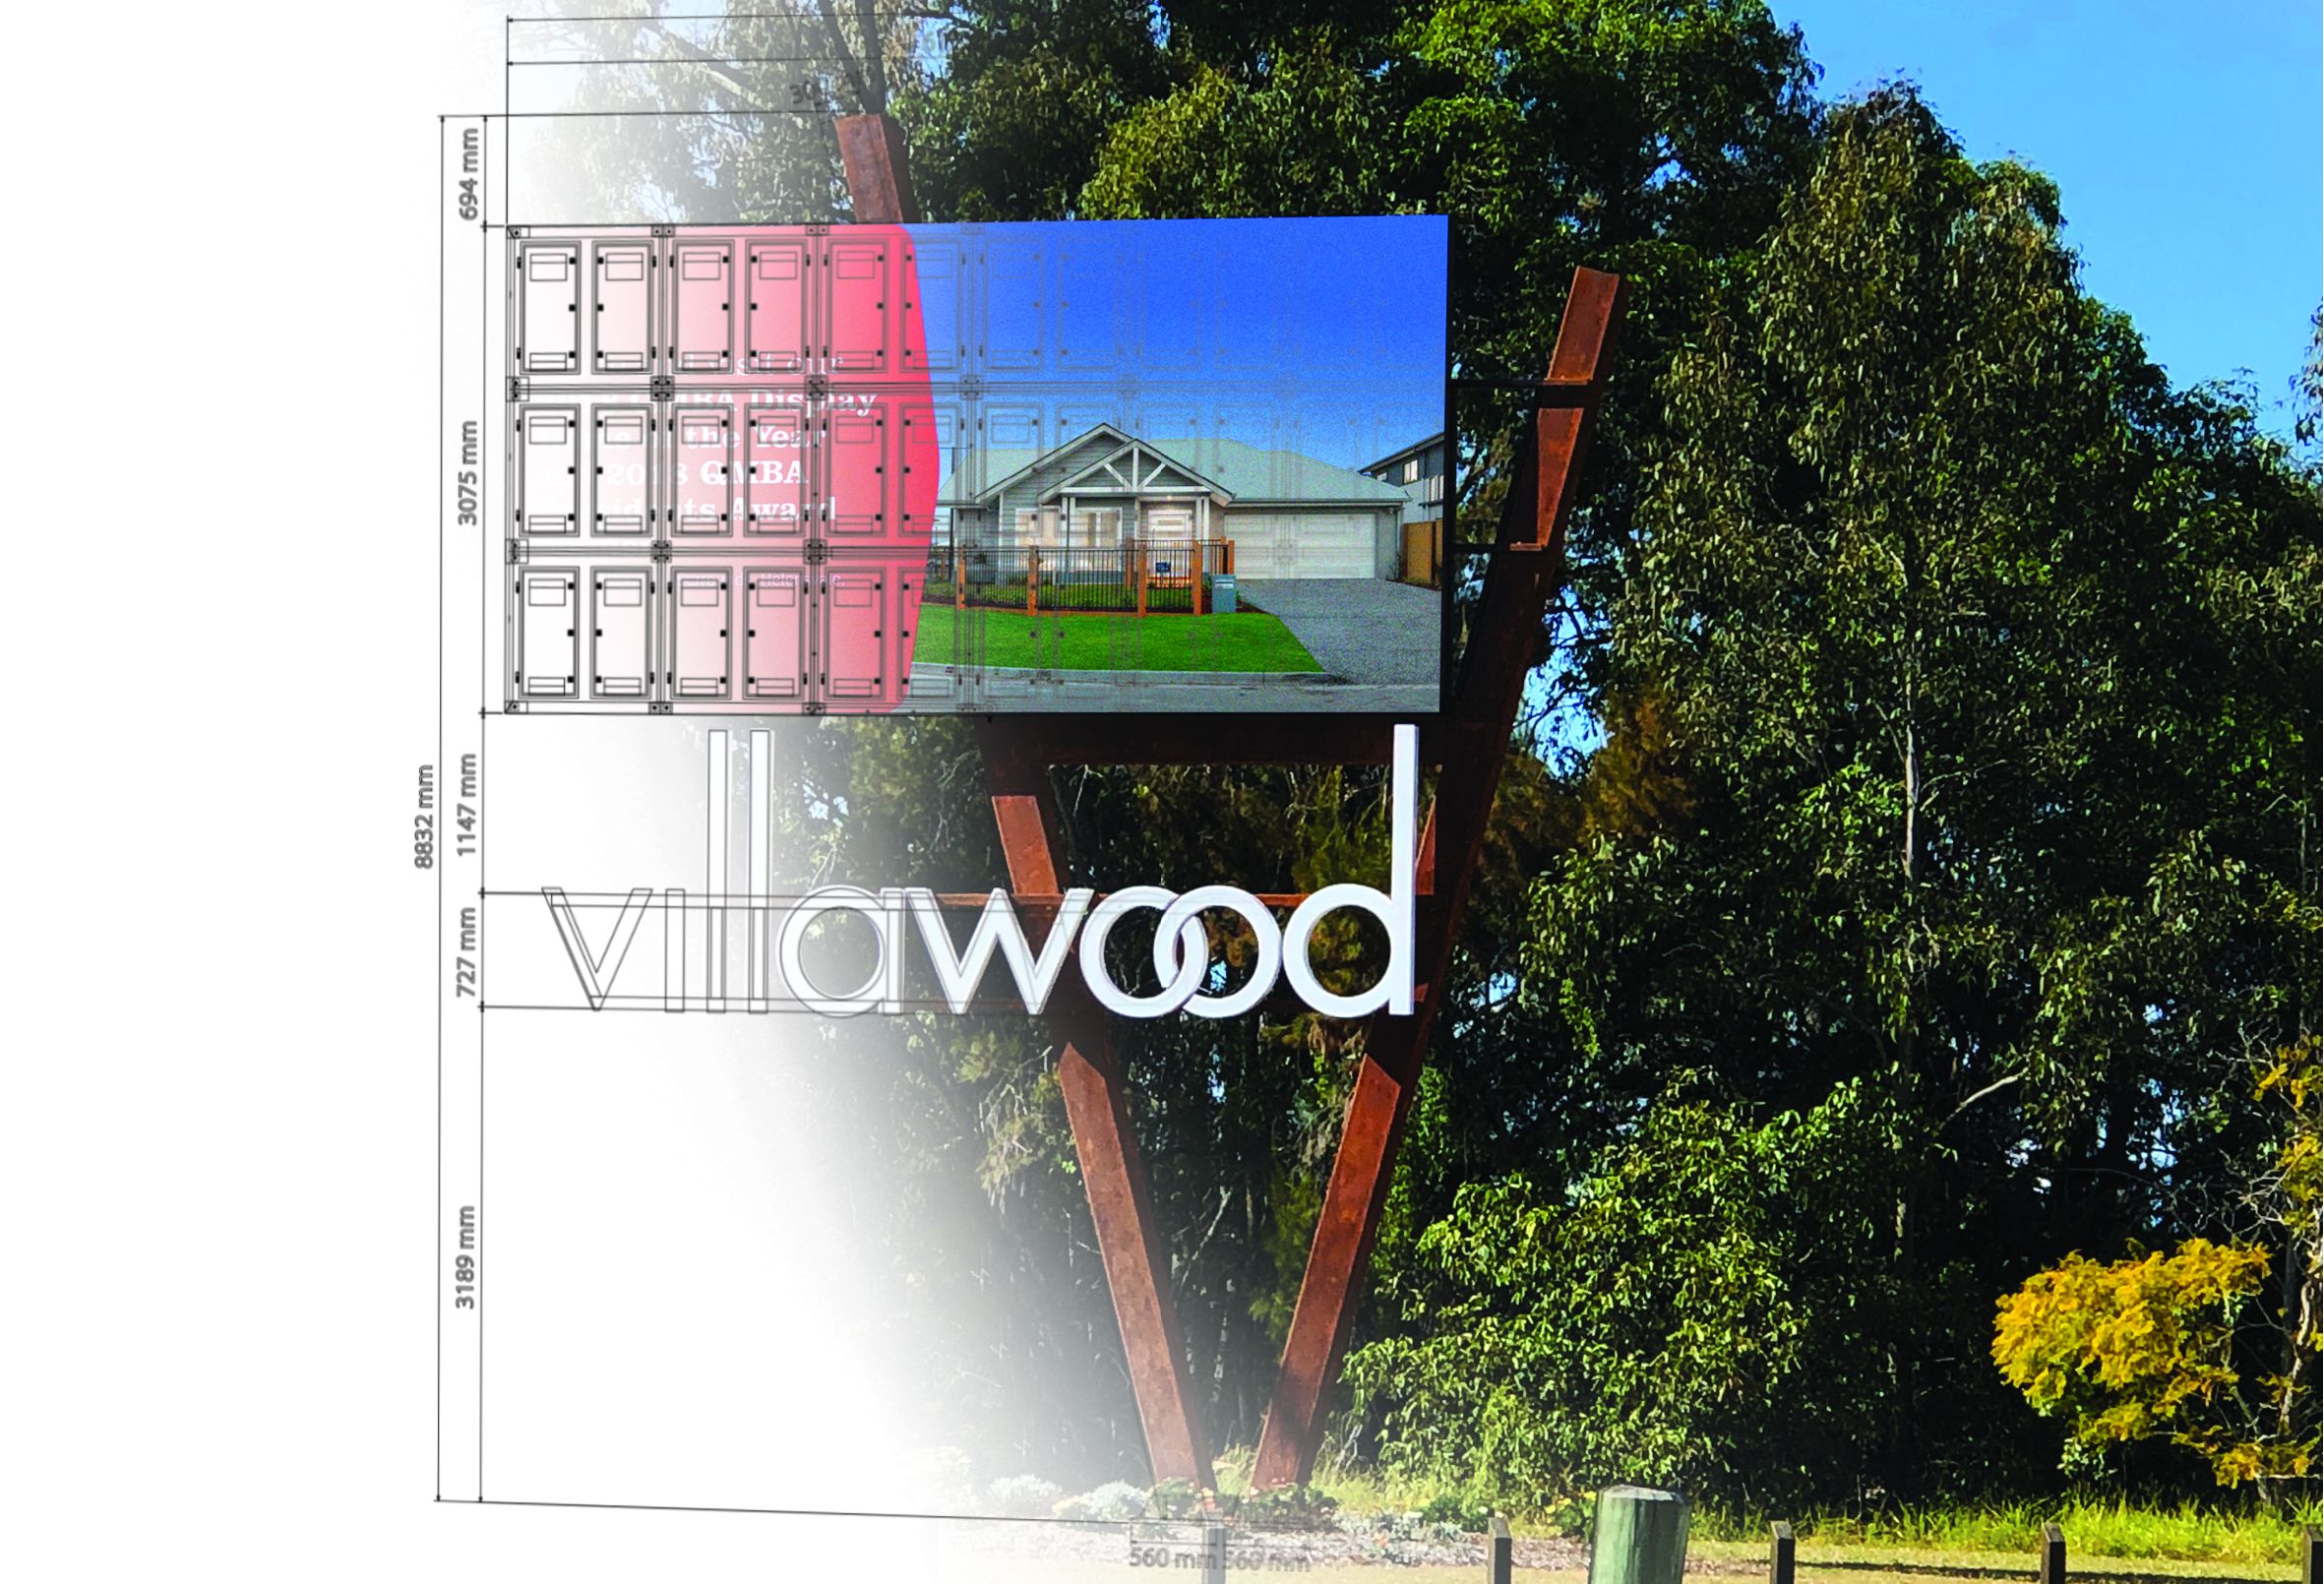 Villawood Digital Pylon Wireframe